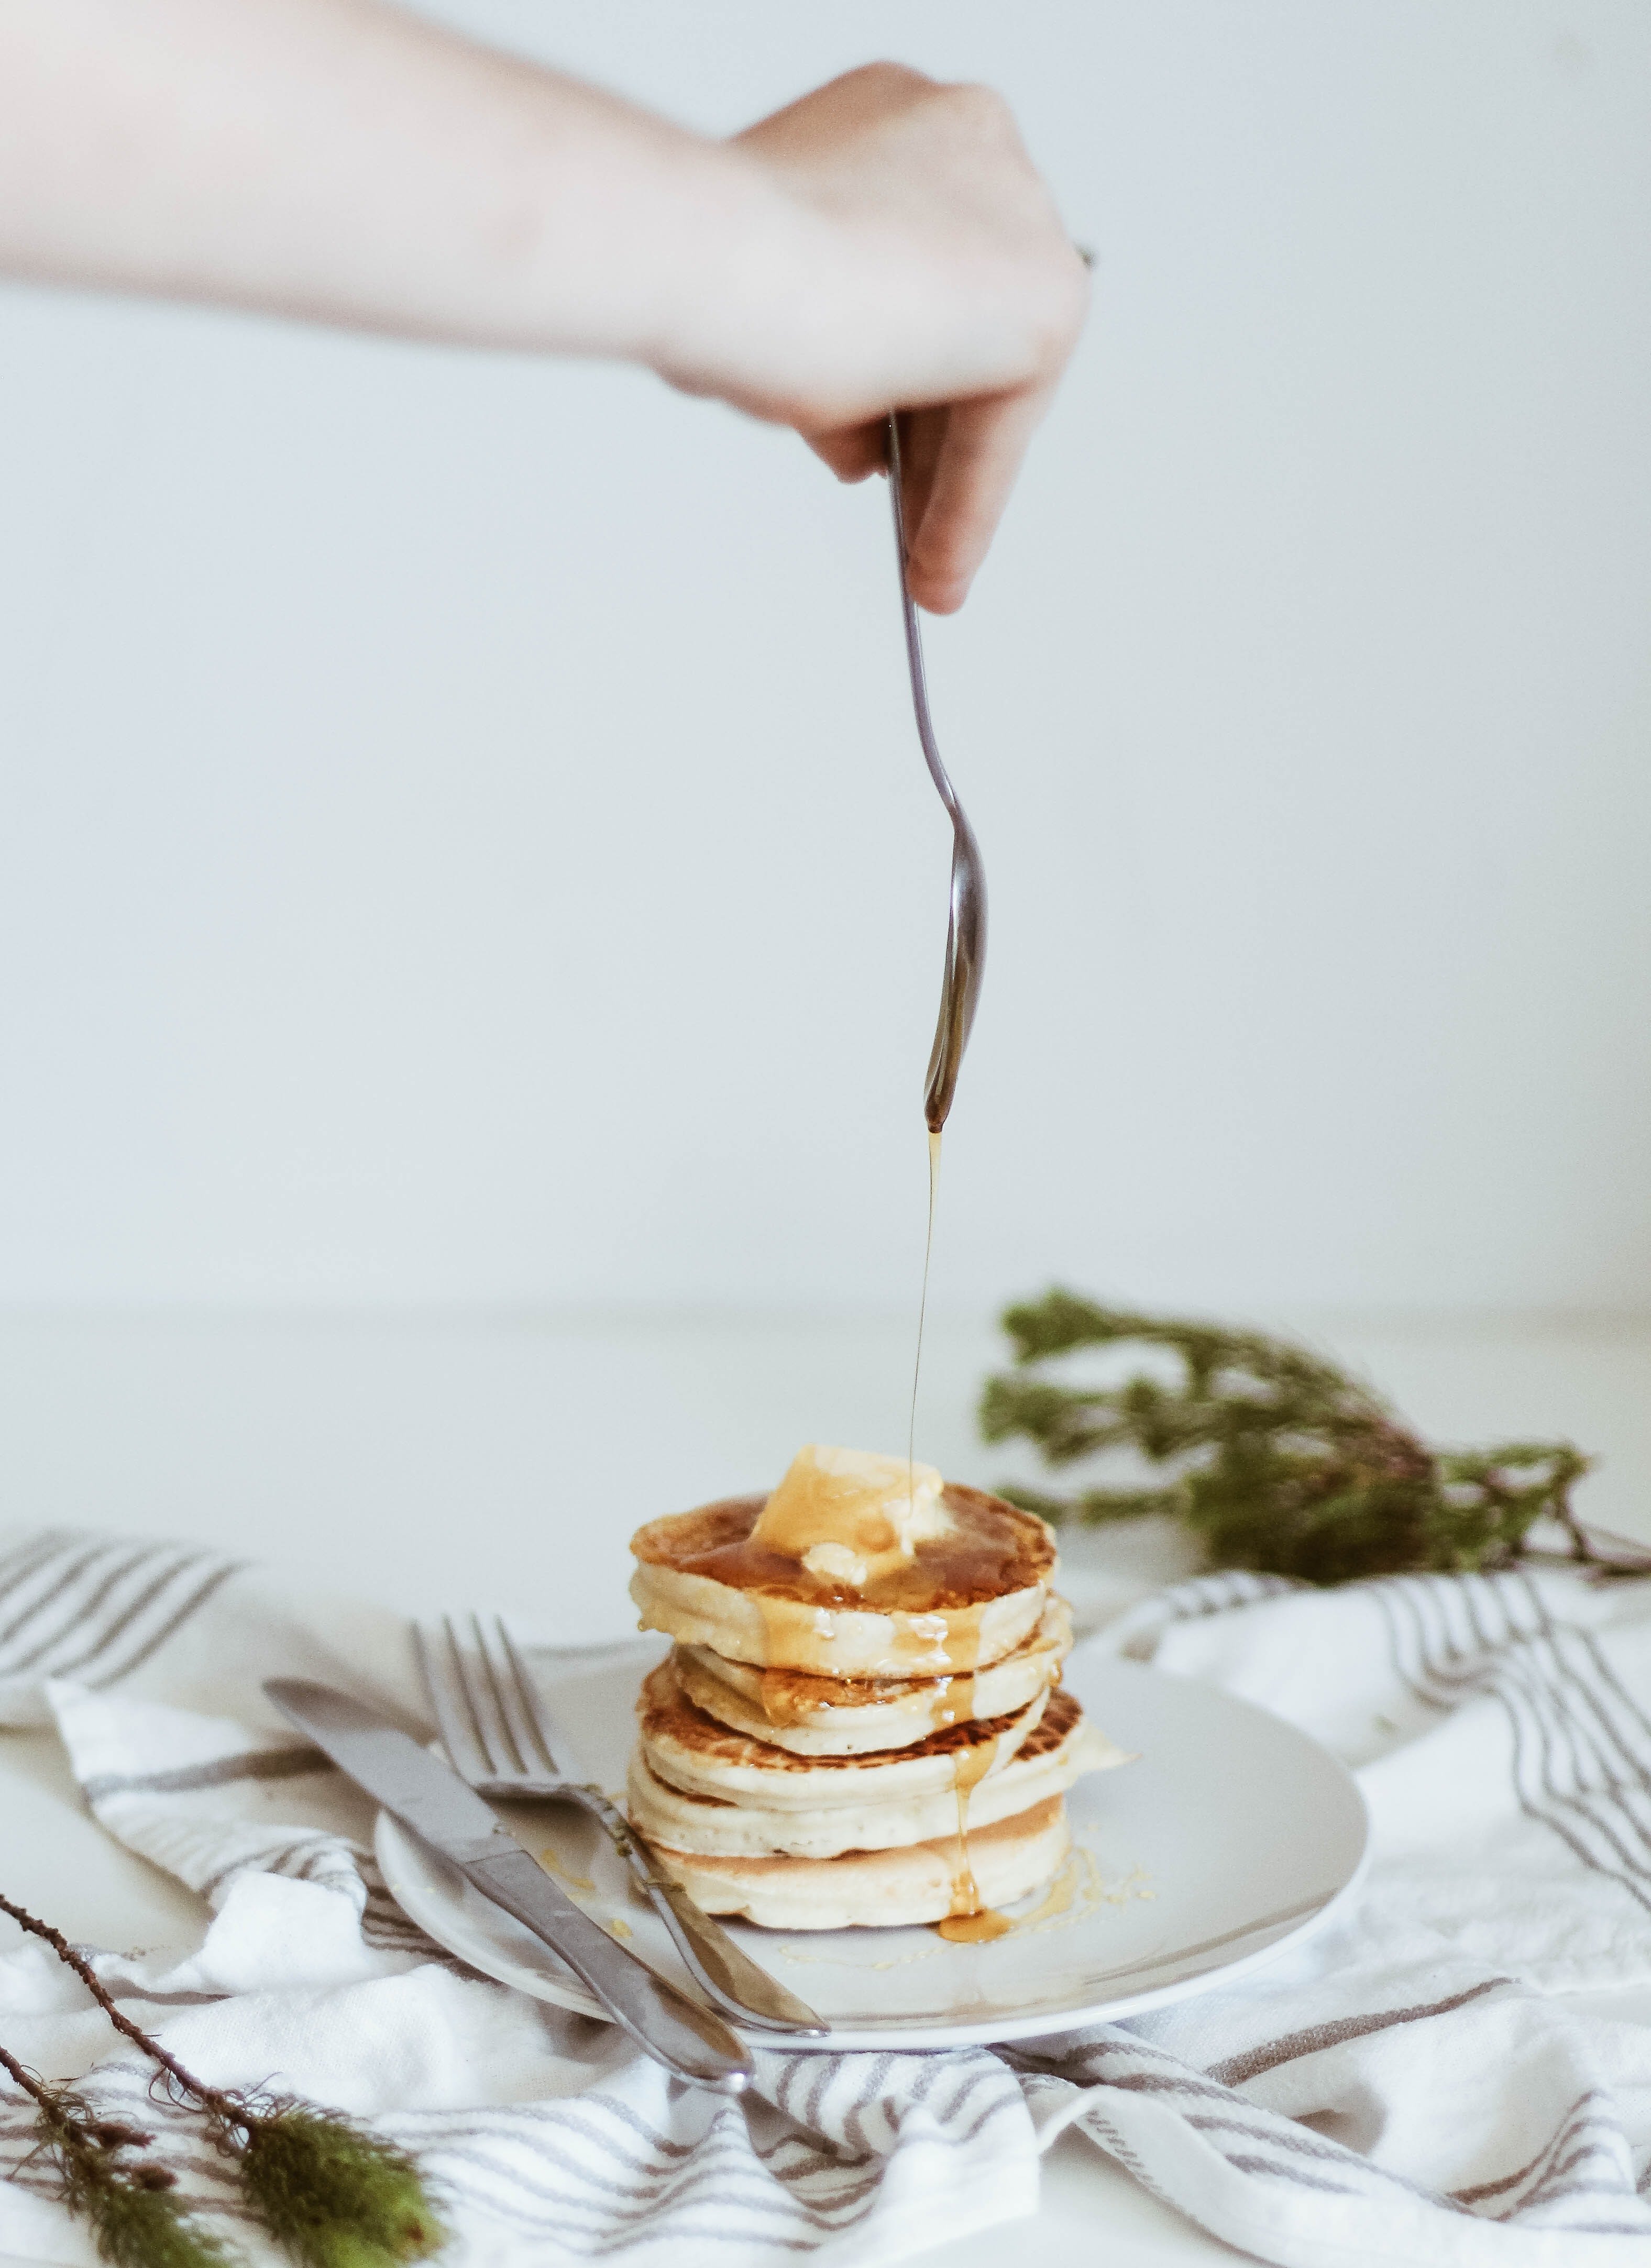 Annette prepared pancakes for breakfast | Source: Unsplash